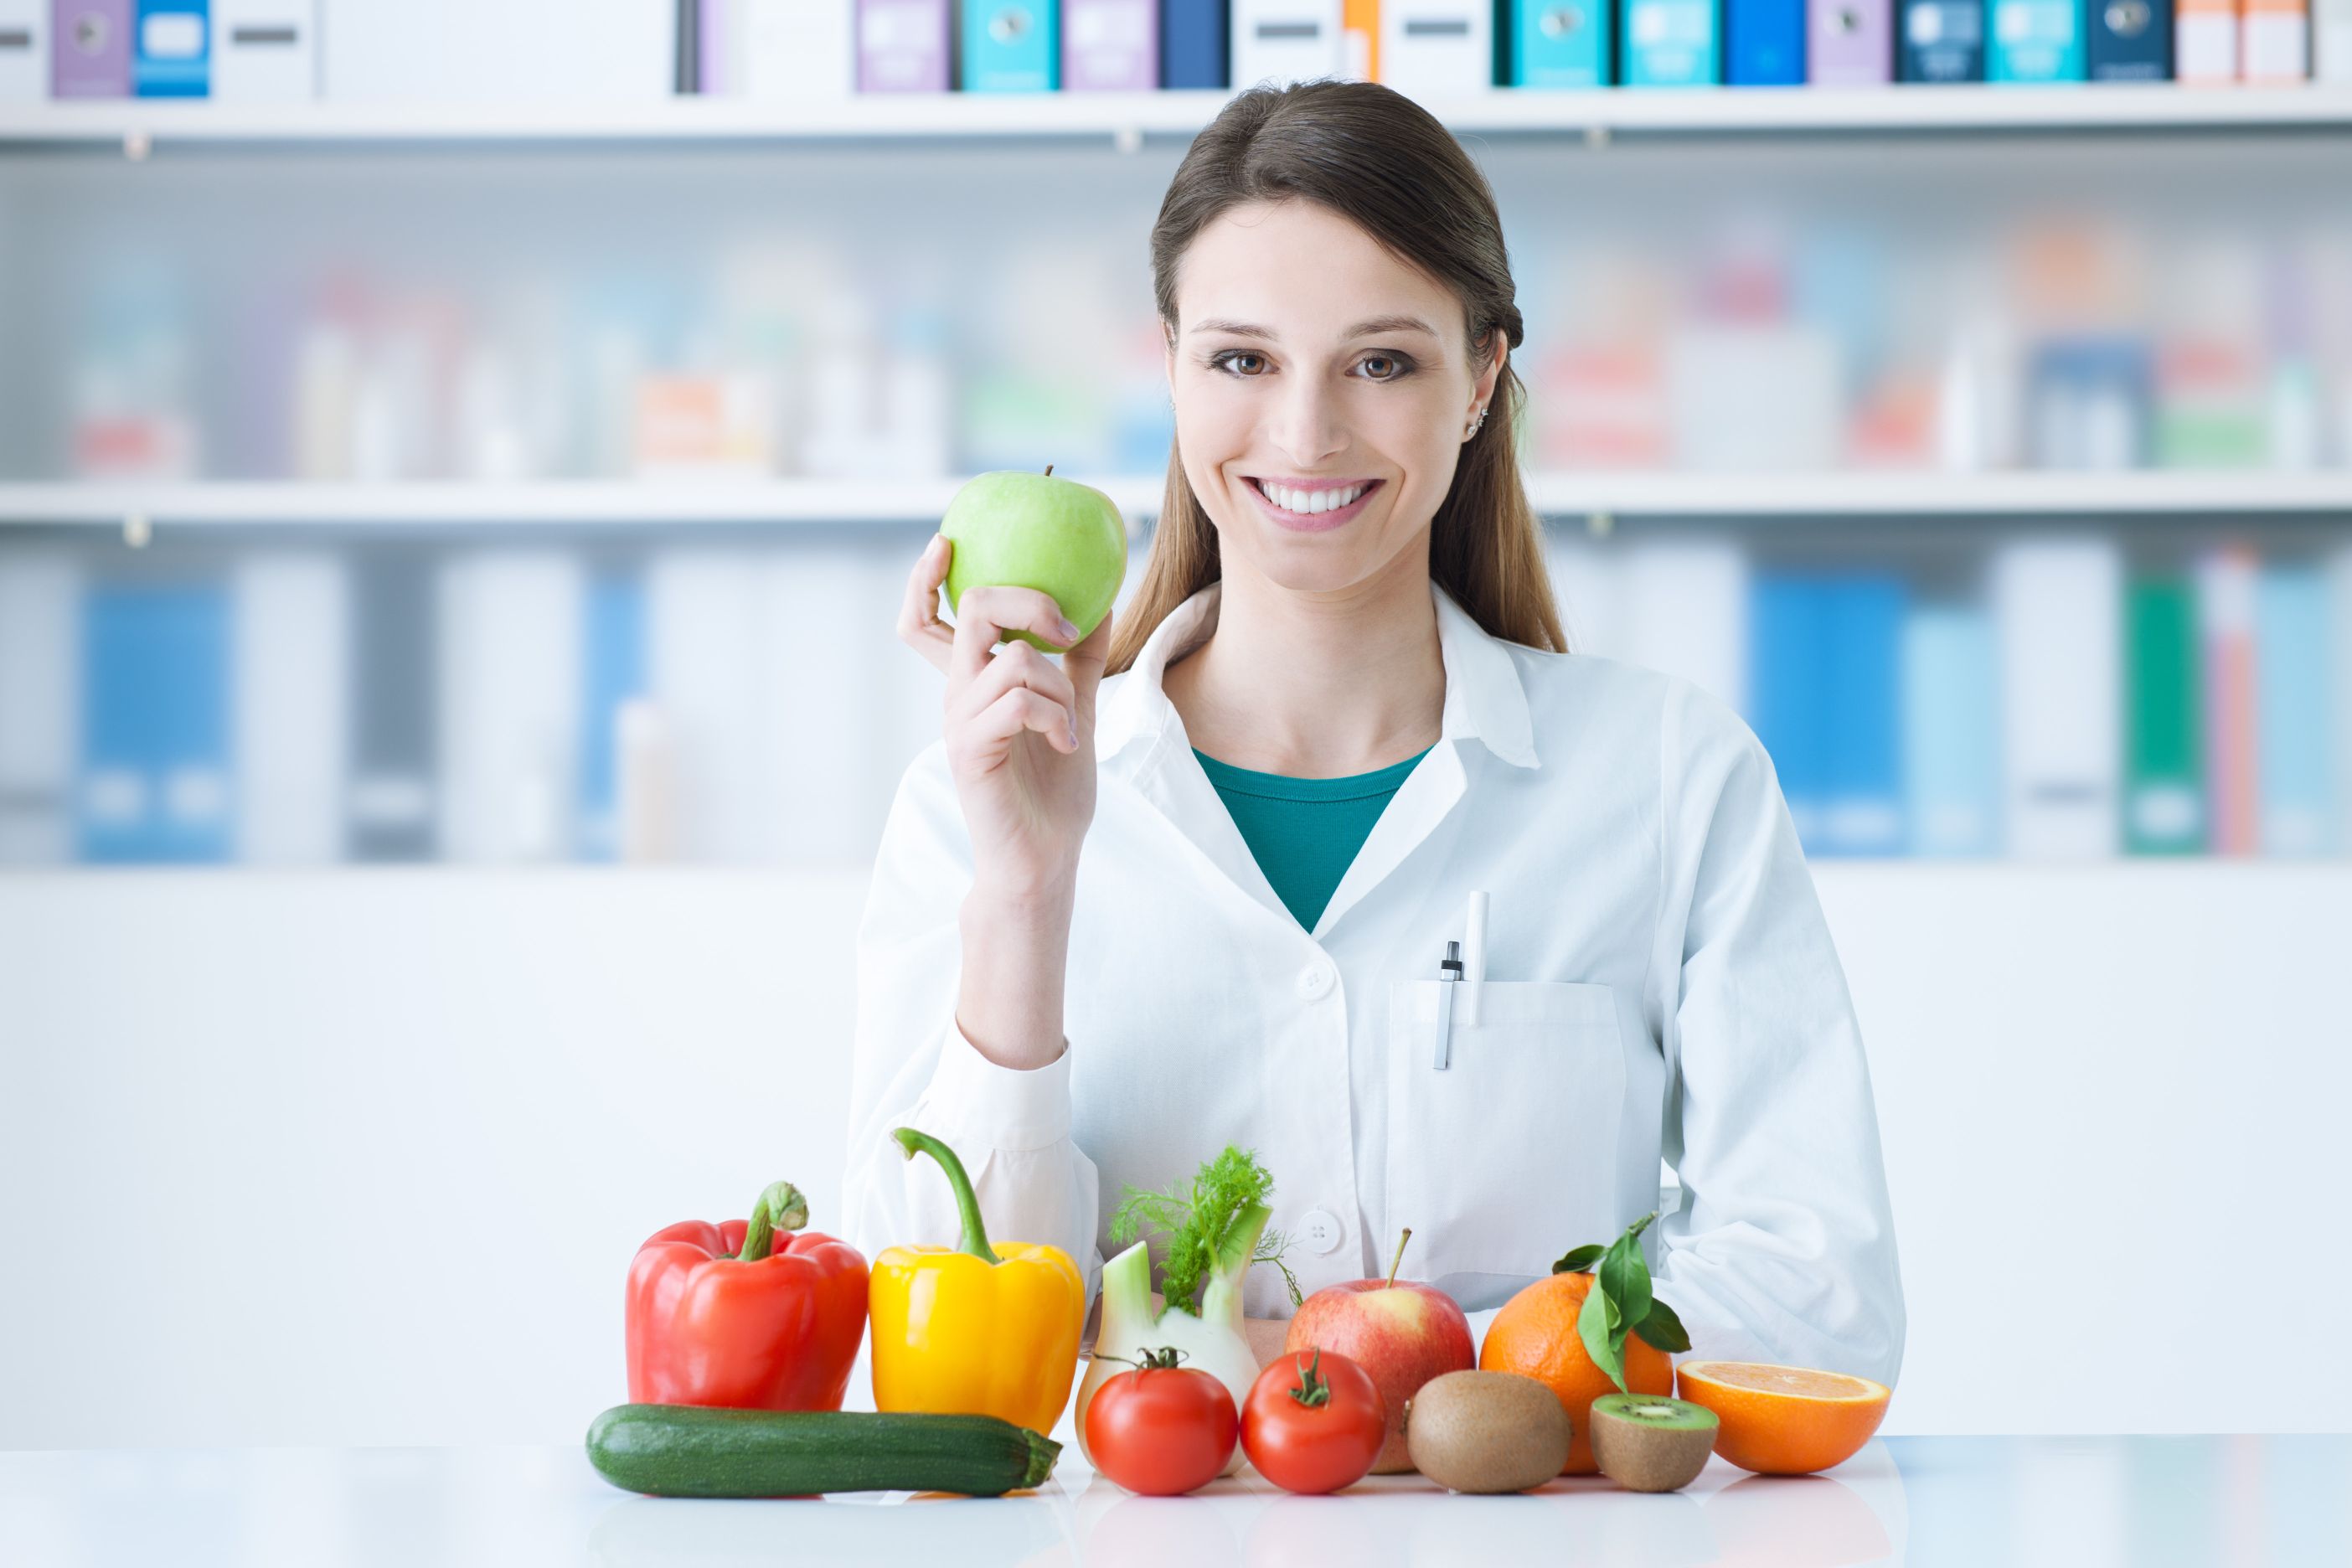 Centro dietético tu salud es natural